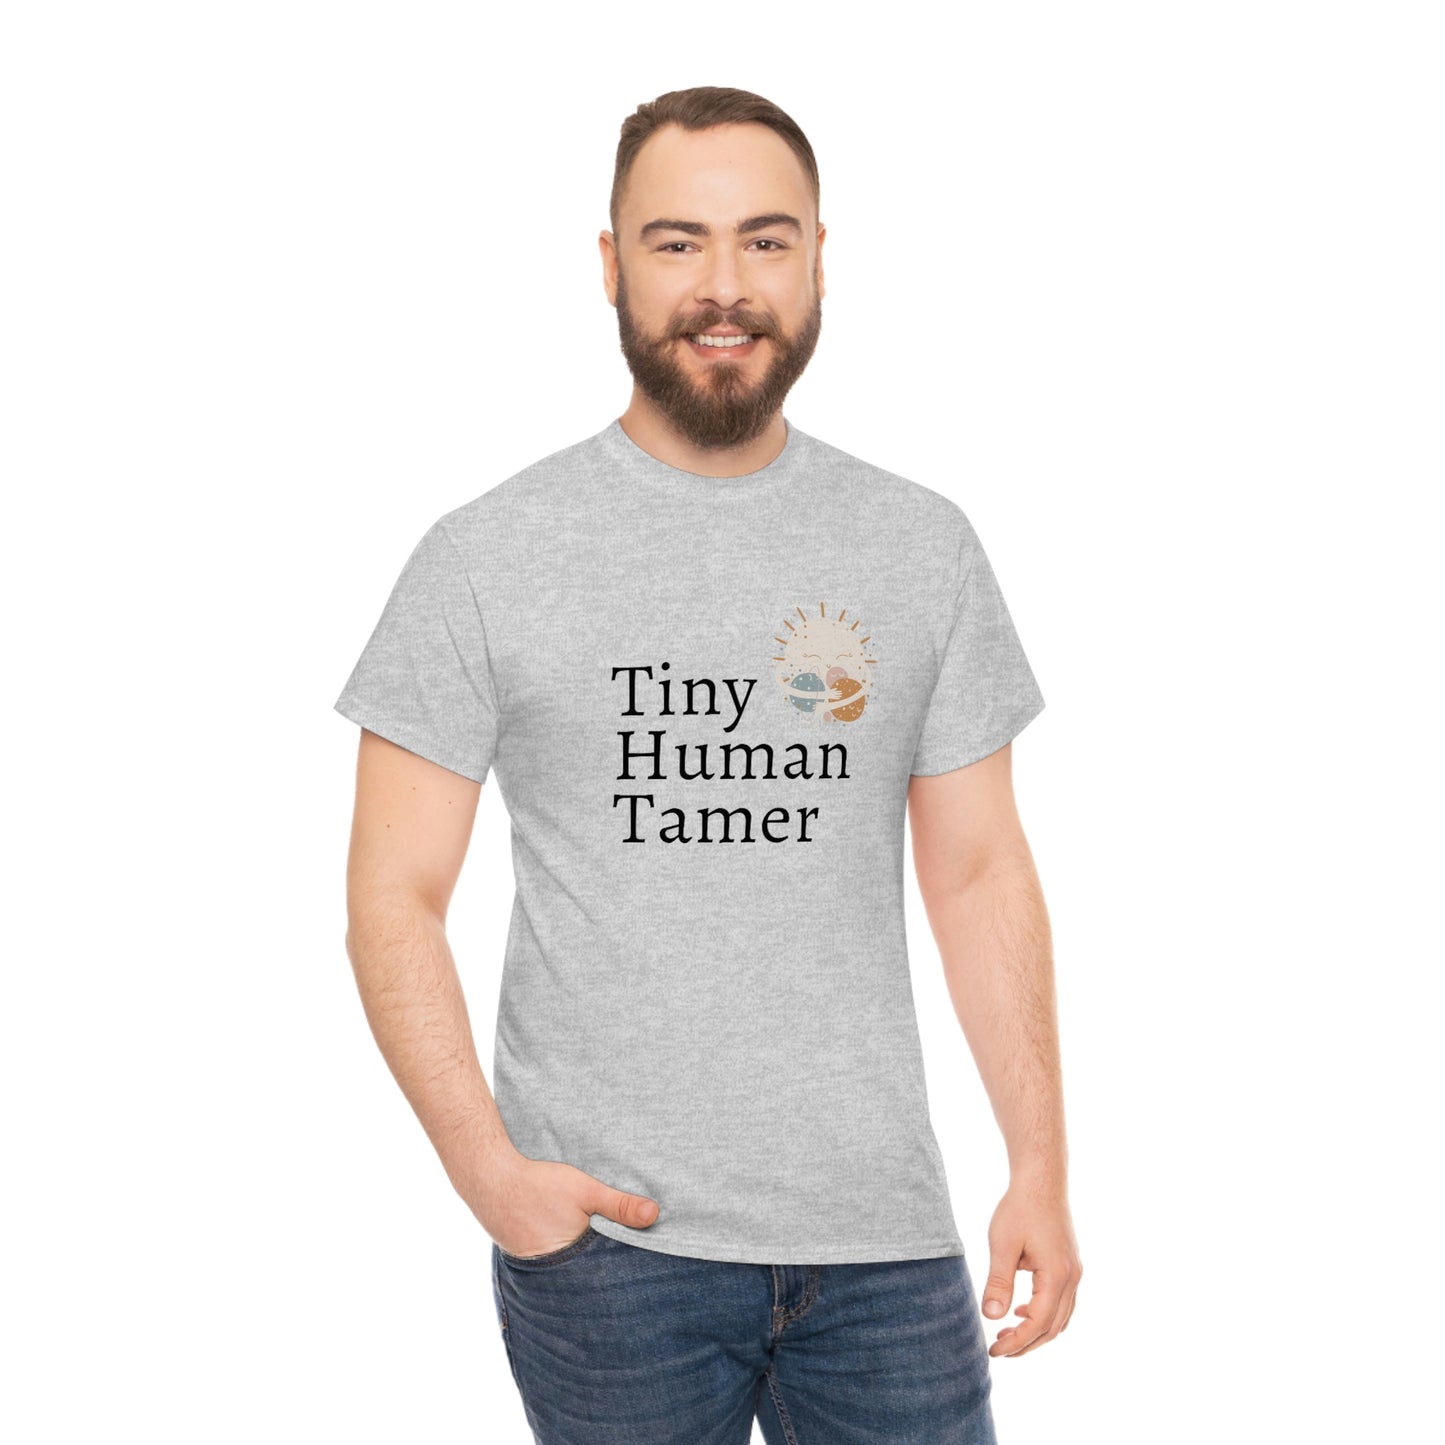 Tiny Human Tamer T-shirt, Mom Gift, Teacher Gift, Dad Gift